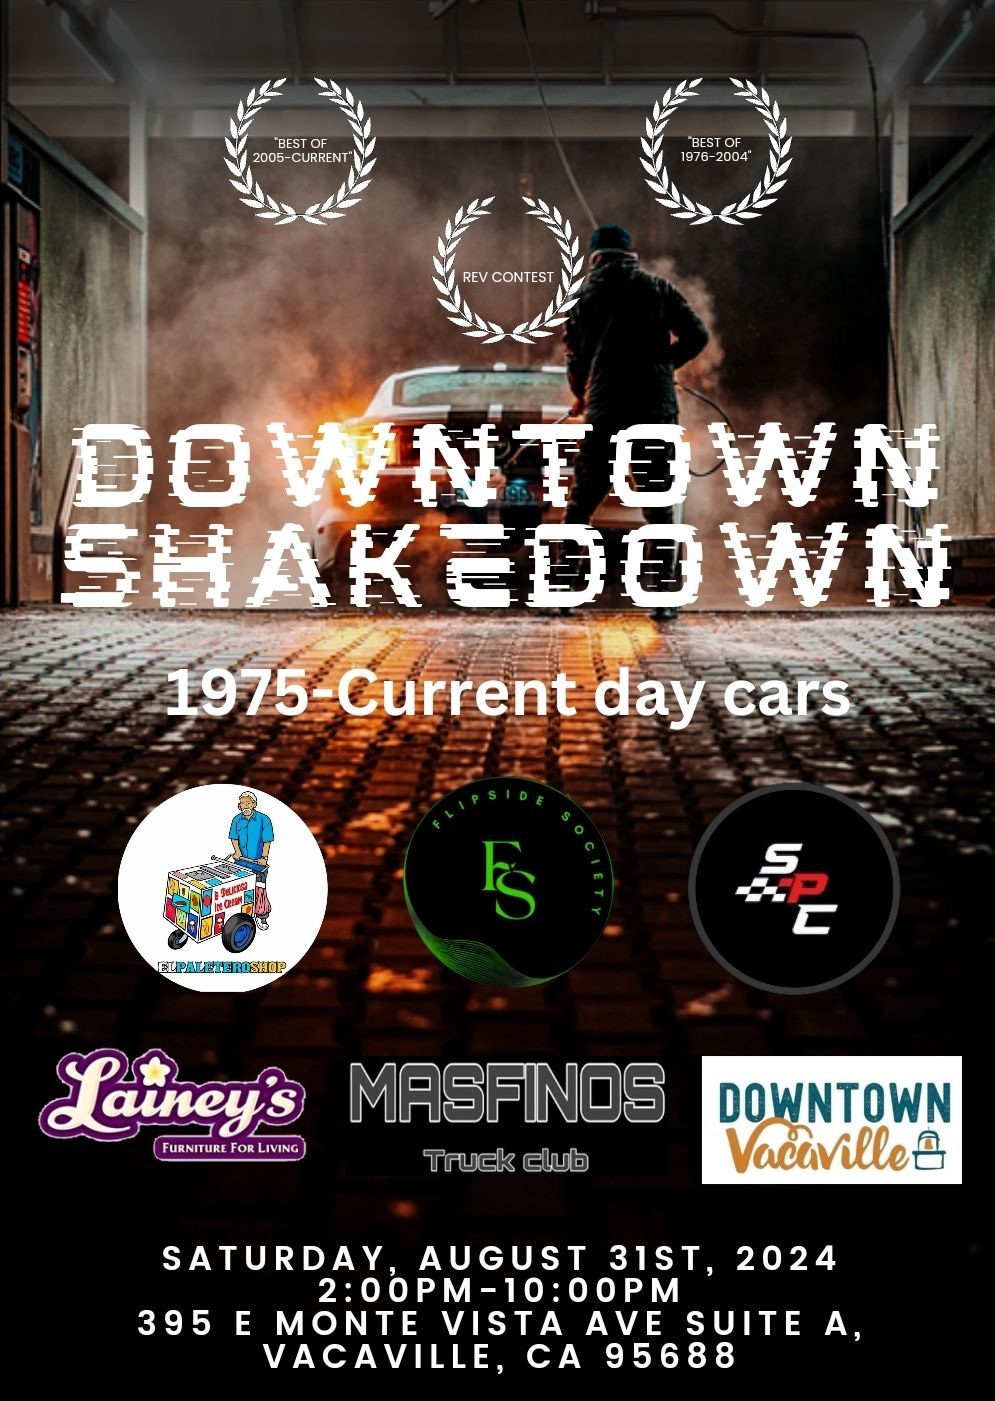 Downtown Shakedown